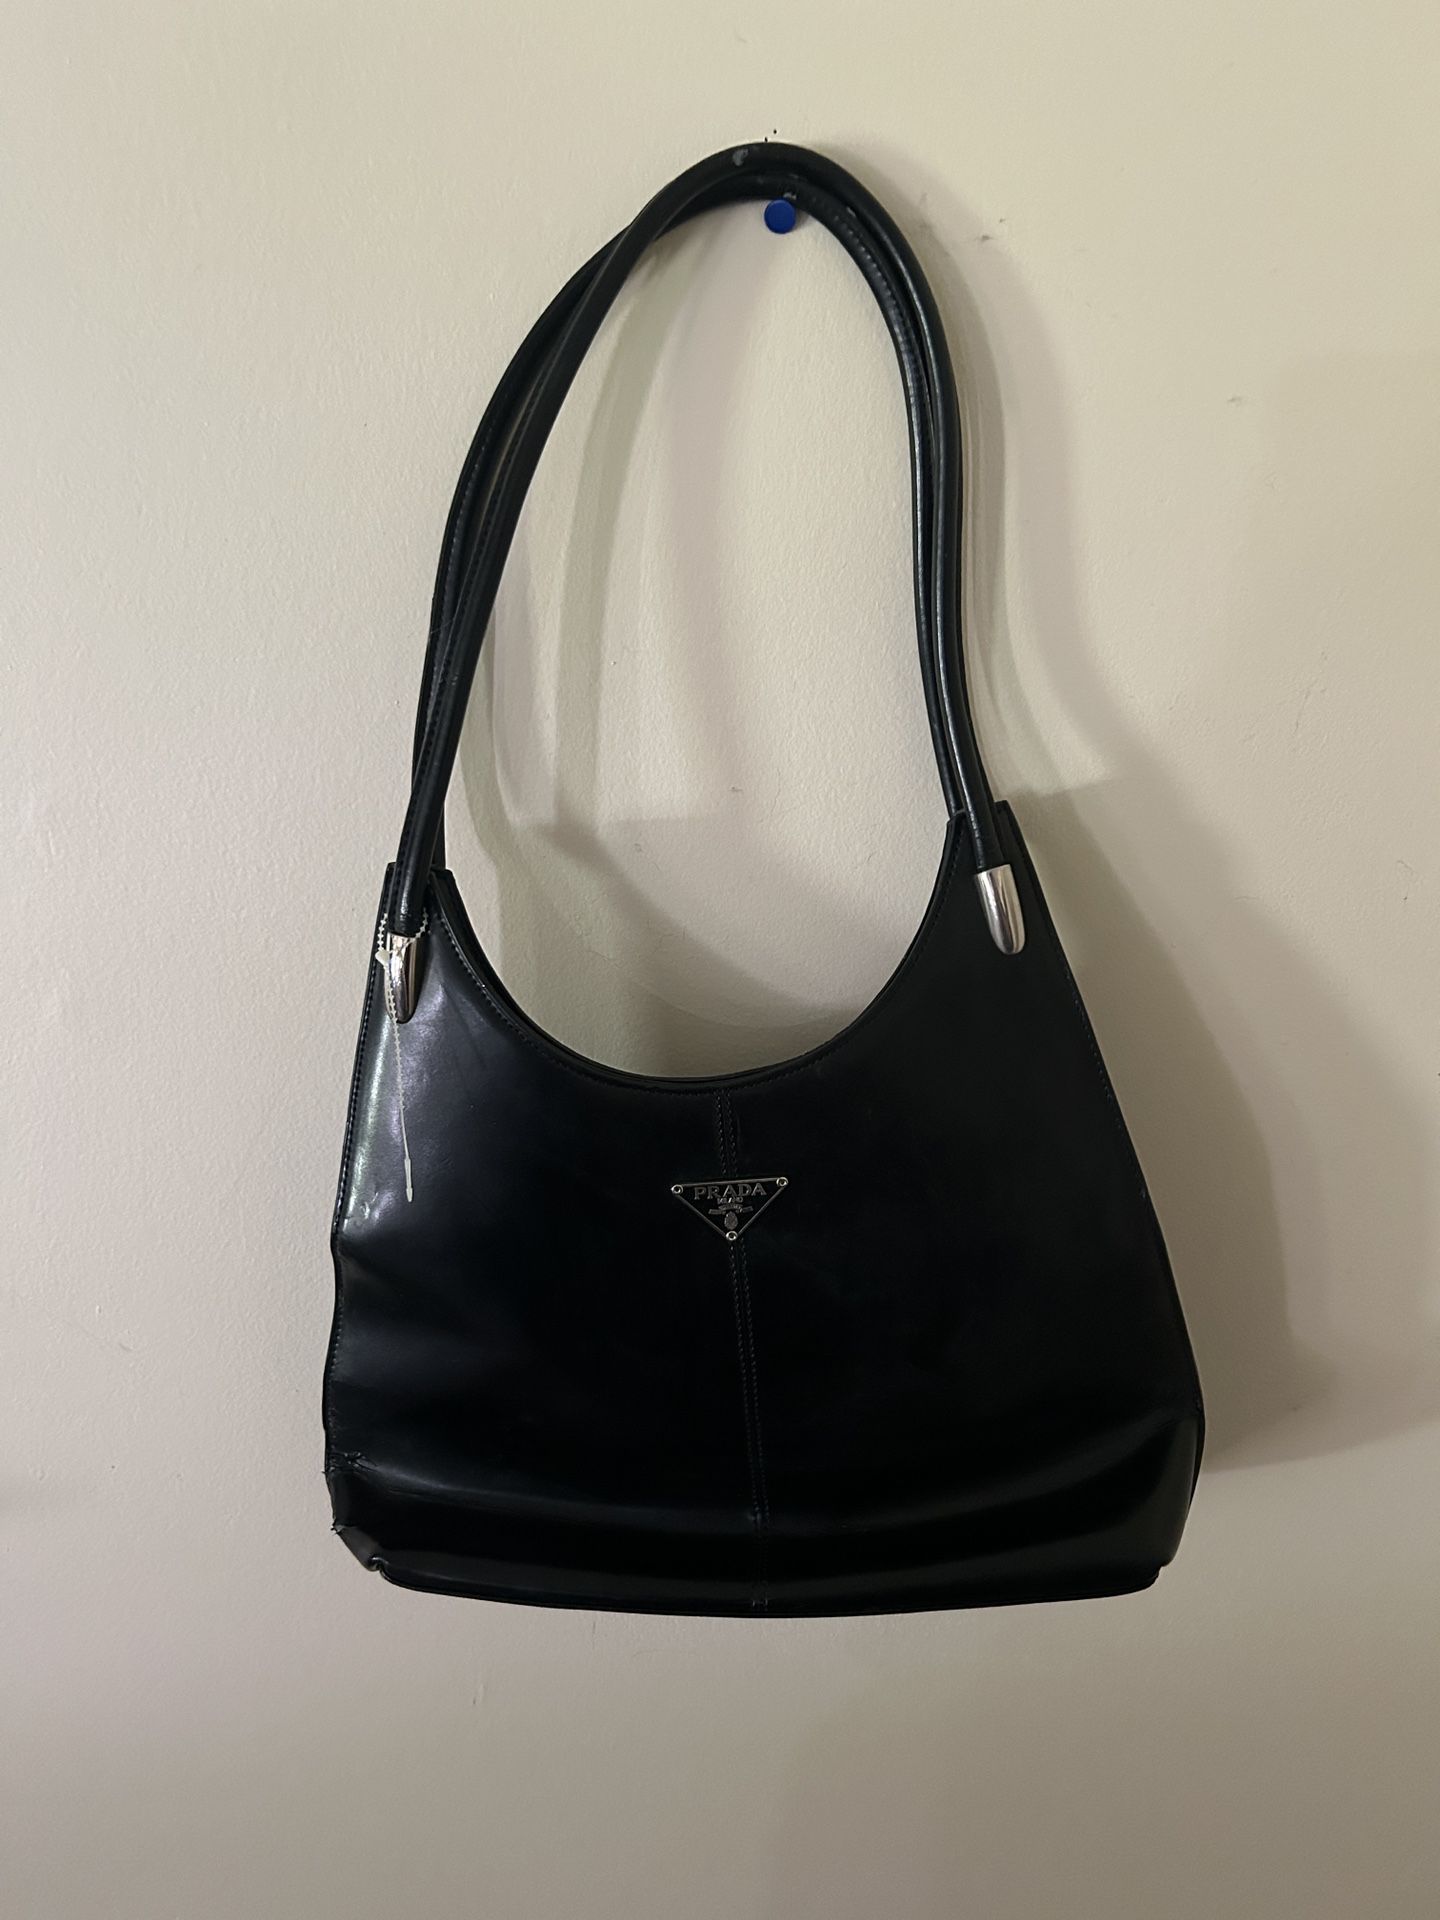 black leather prada bag